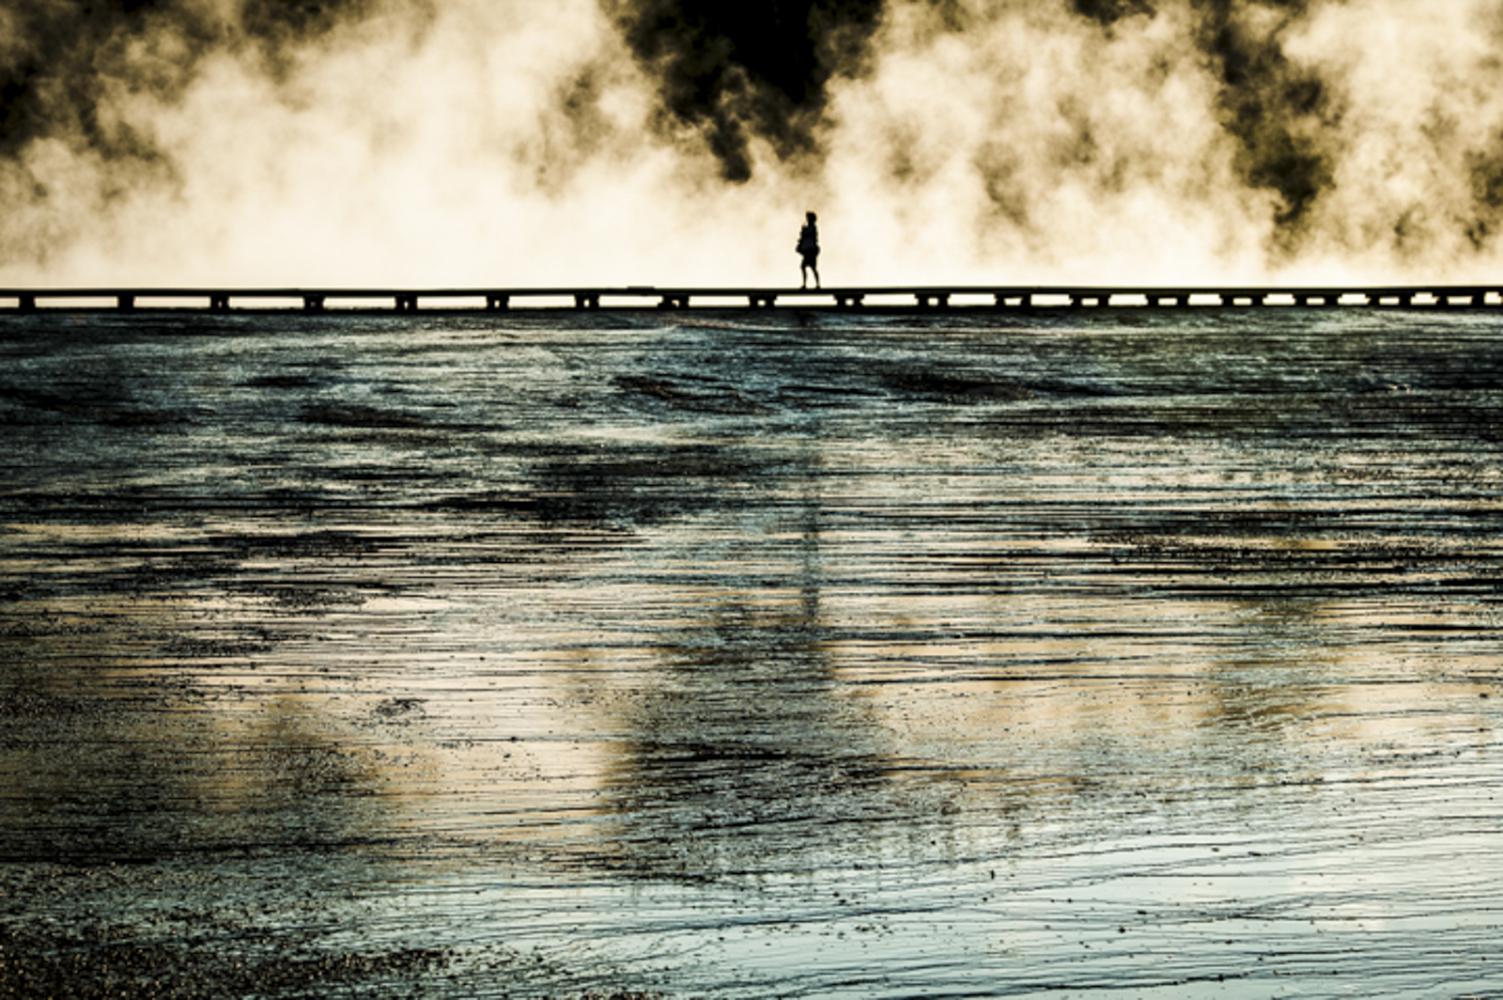 ENVIRONMENT - A women walks on a plank overlooking a geyser in...